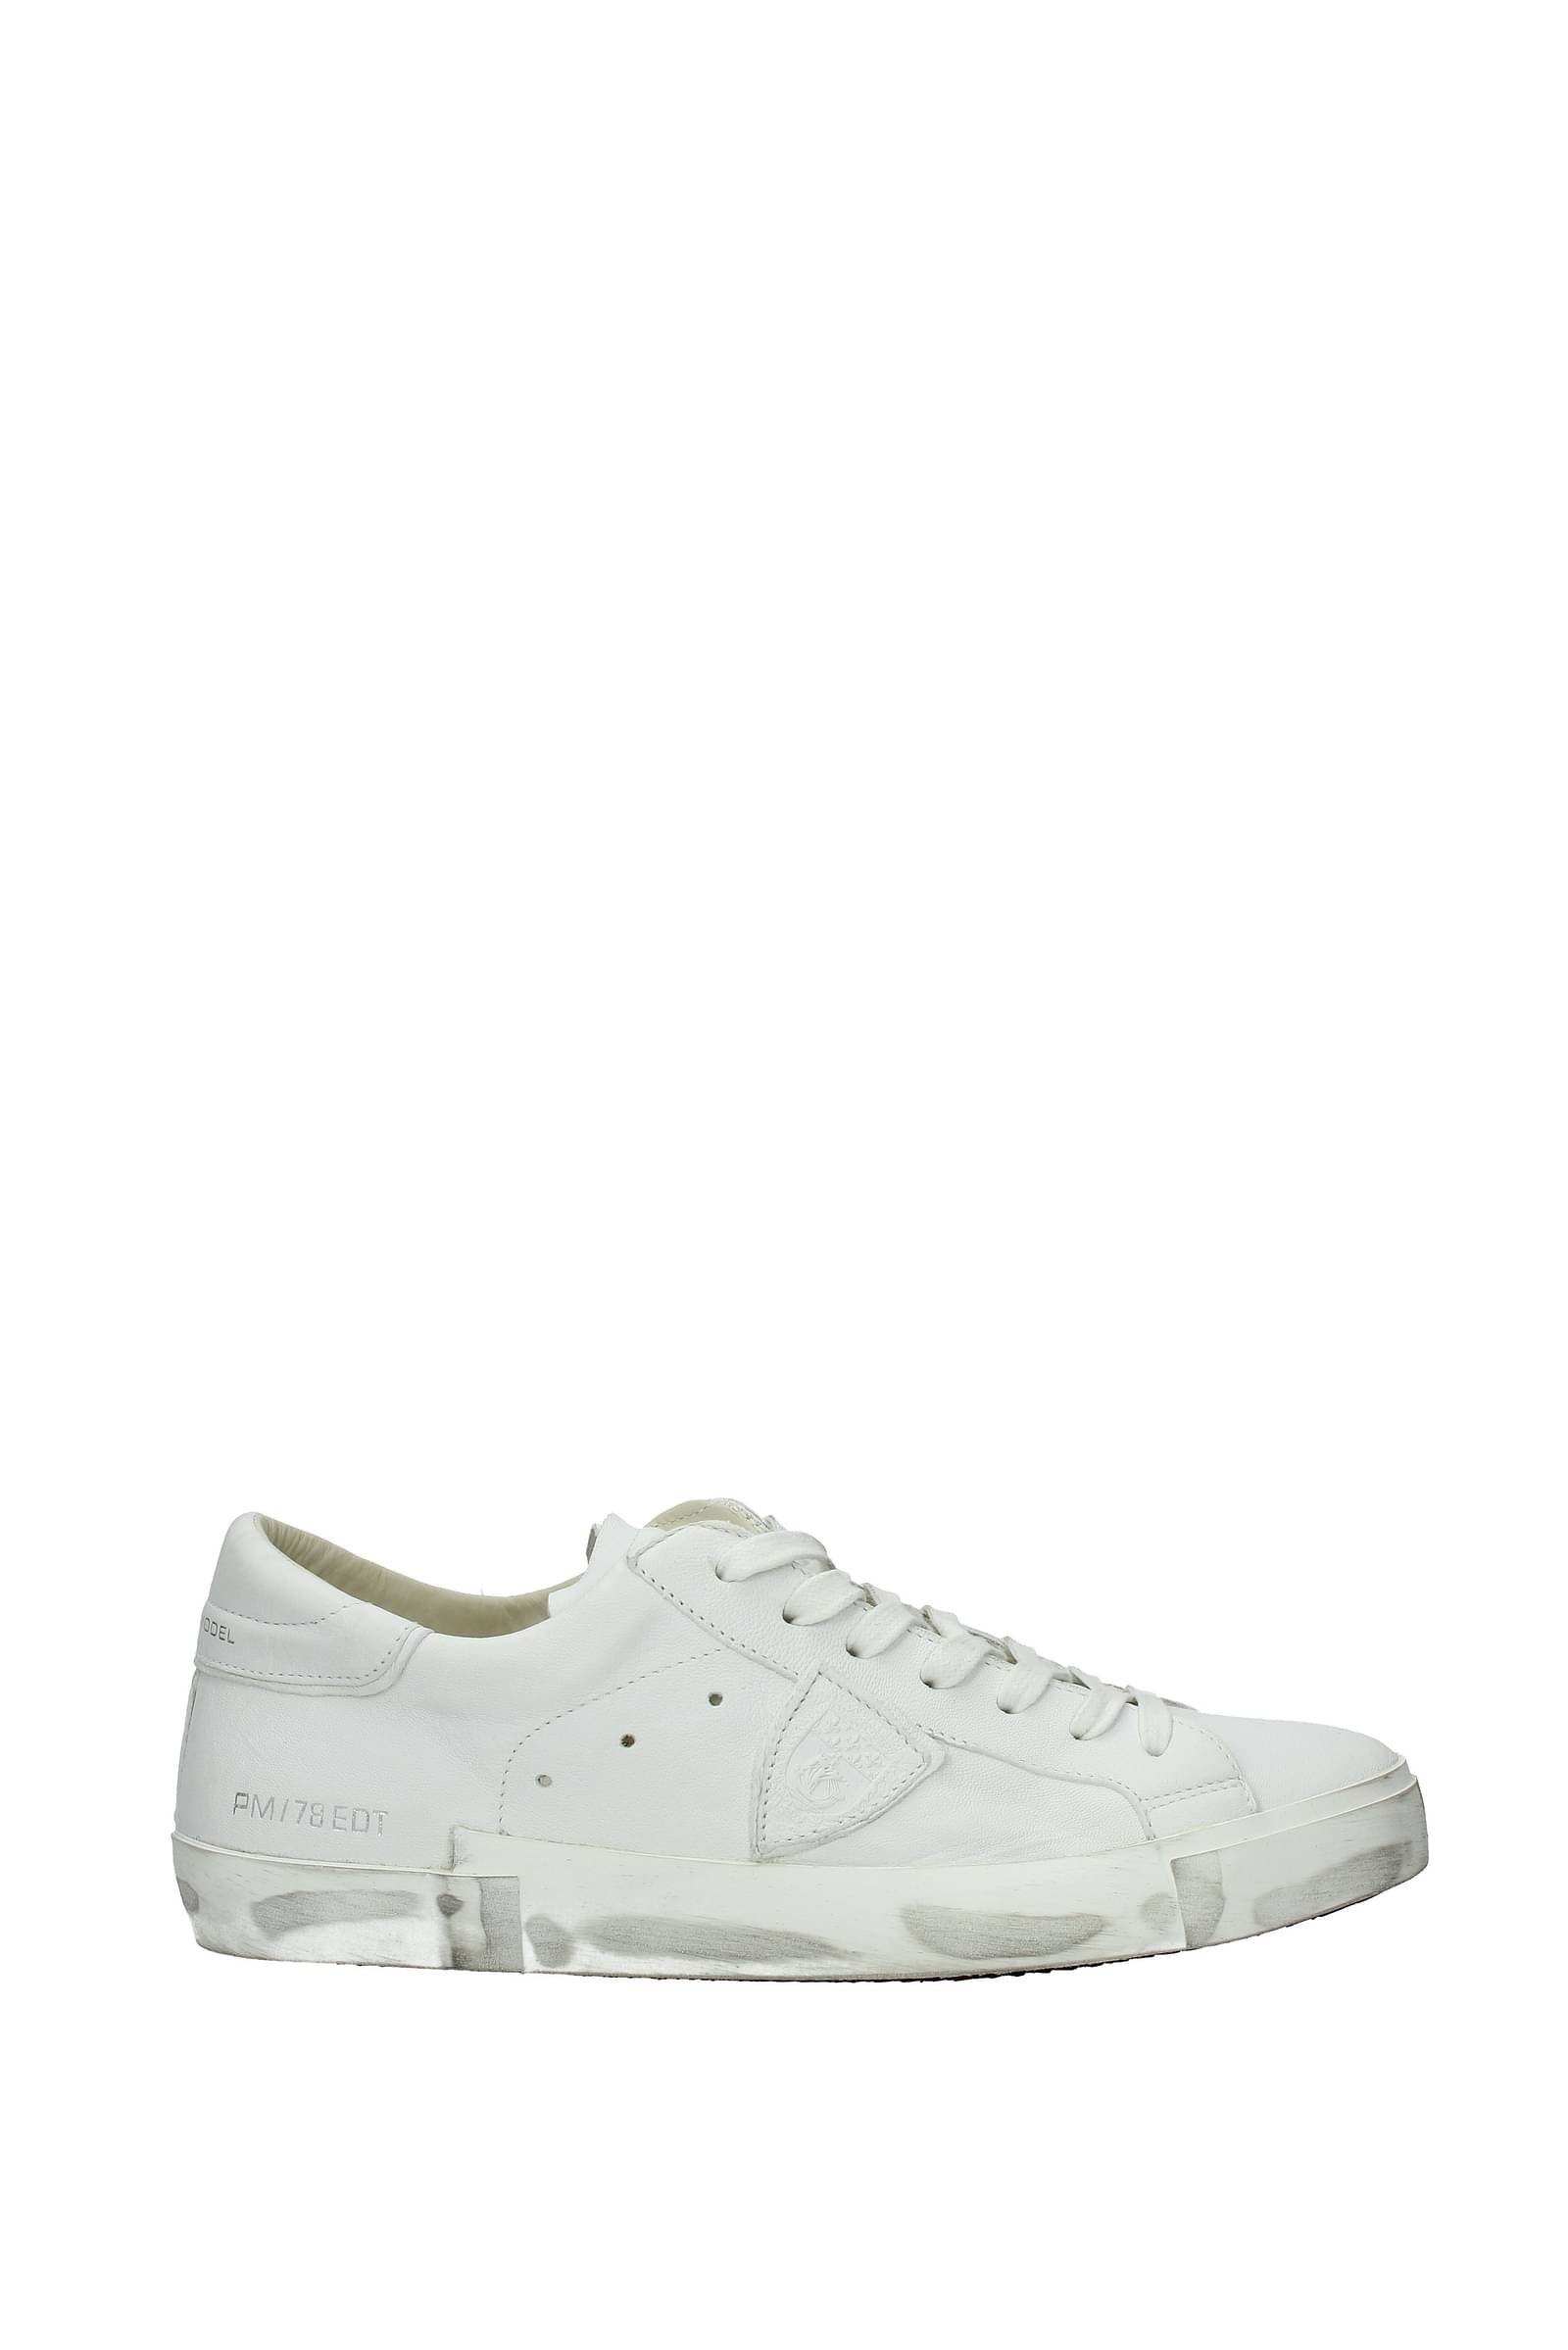 Philippe Model Sneakers prsx Men PRLU1012 Leather White White 168€